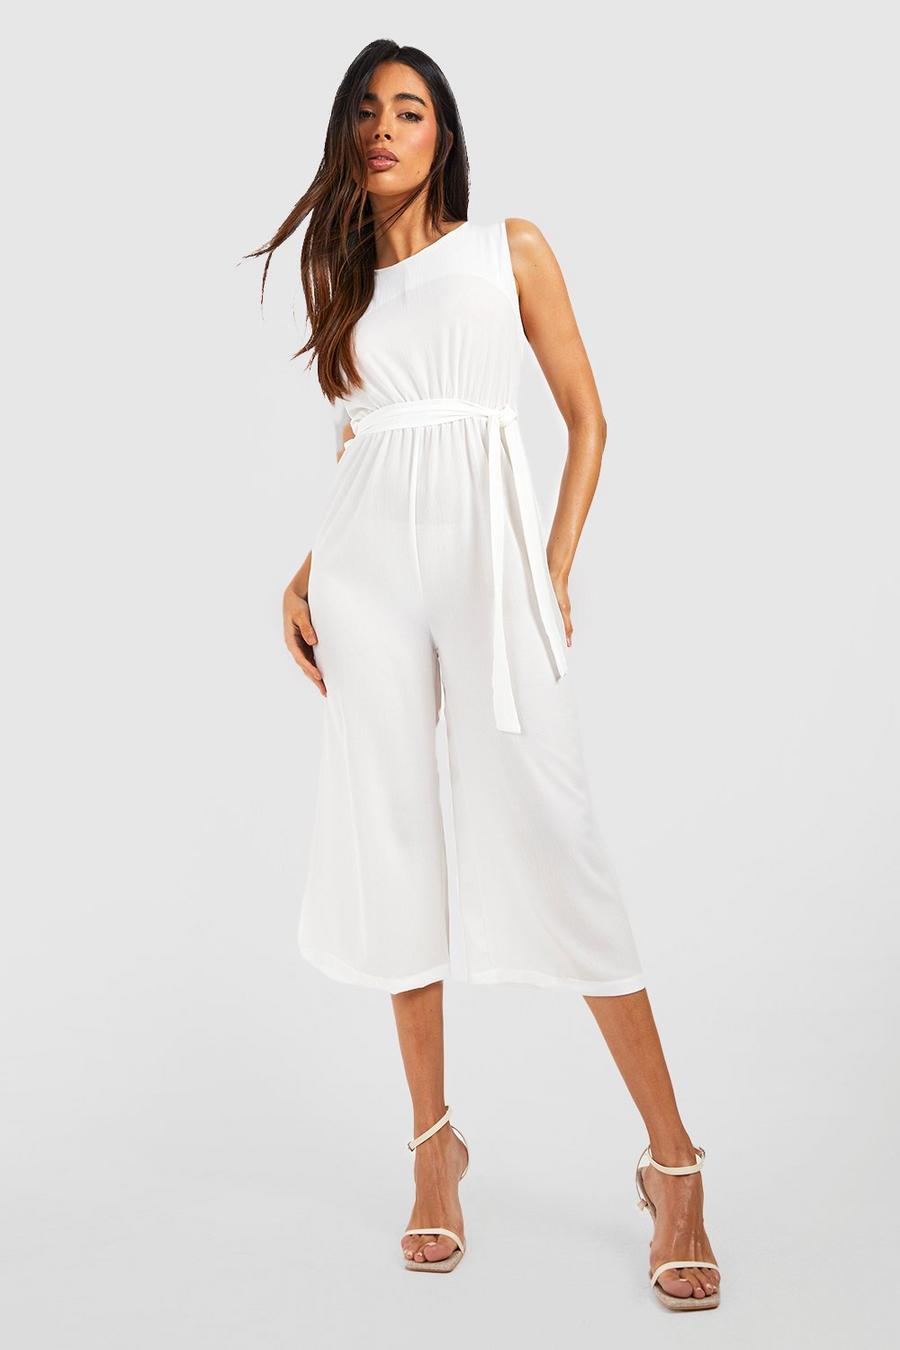 Combinaison jupe-culotte, Ivory white